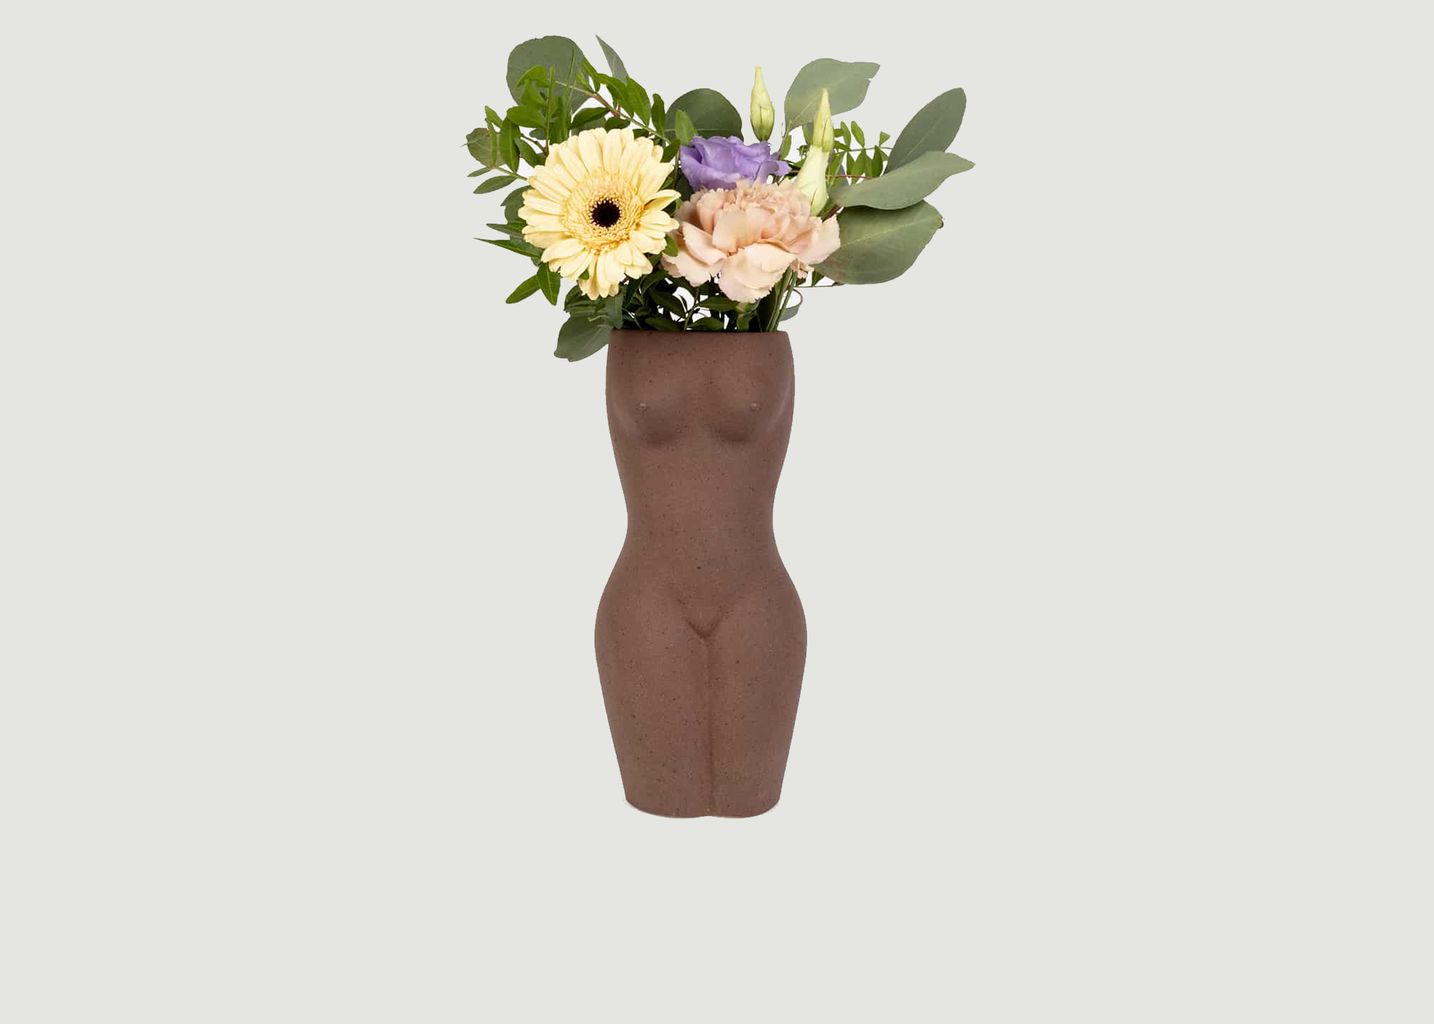 Grand vase corps en céramique  - Doiy